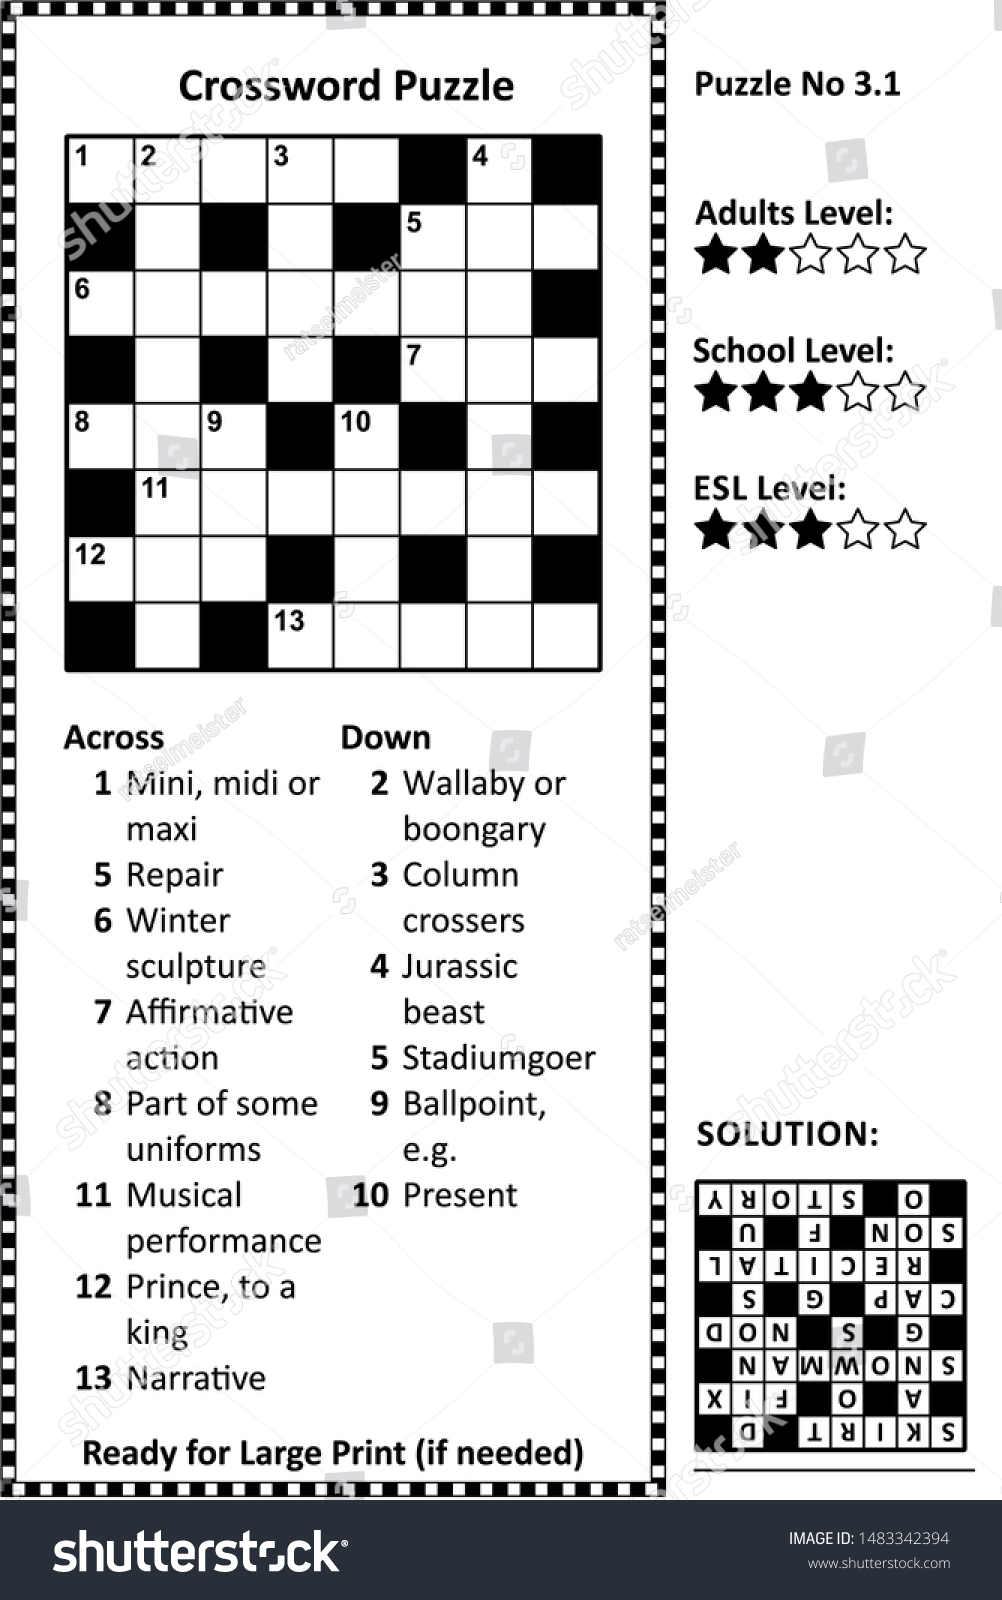 Crossword Puzzle Grid Clues Solution ...